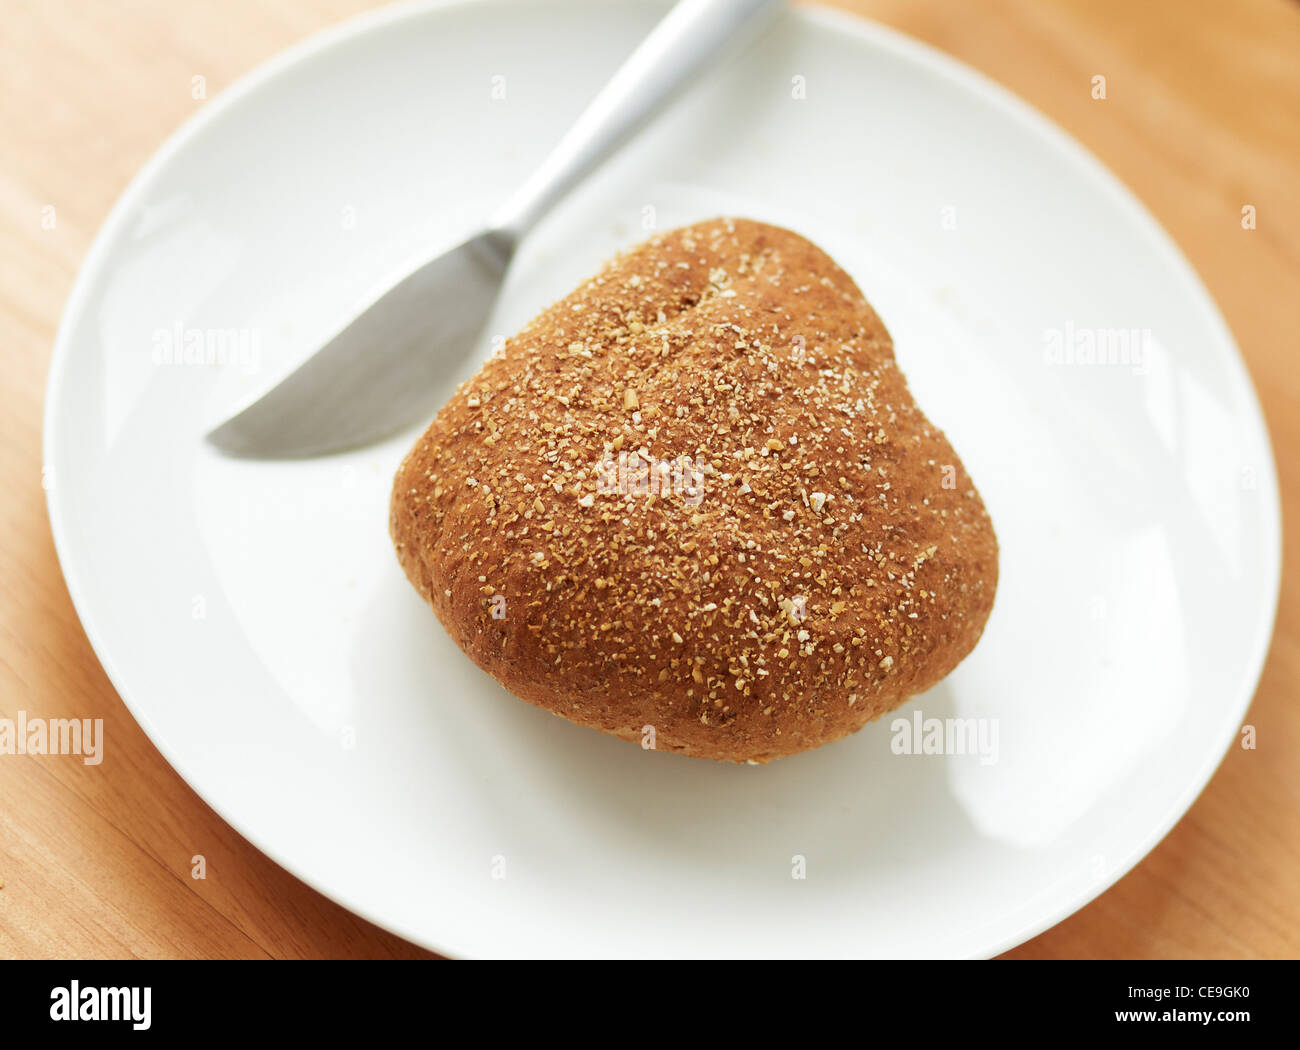 Breadbun on a plate Stock Photo